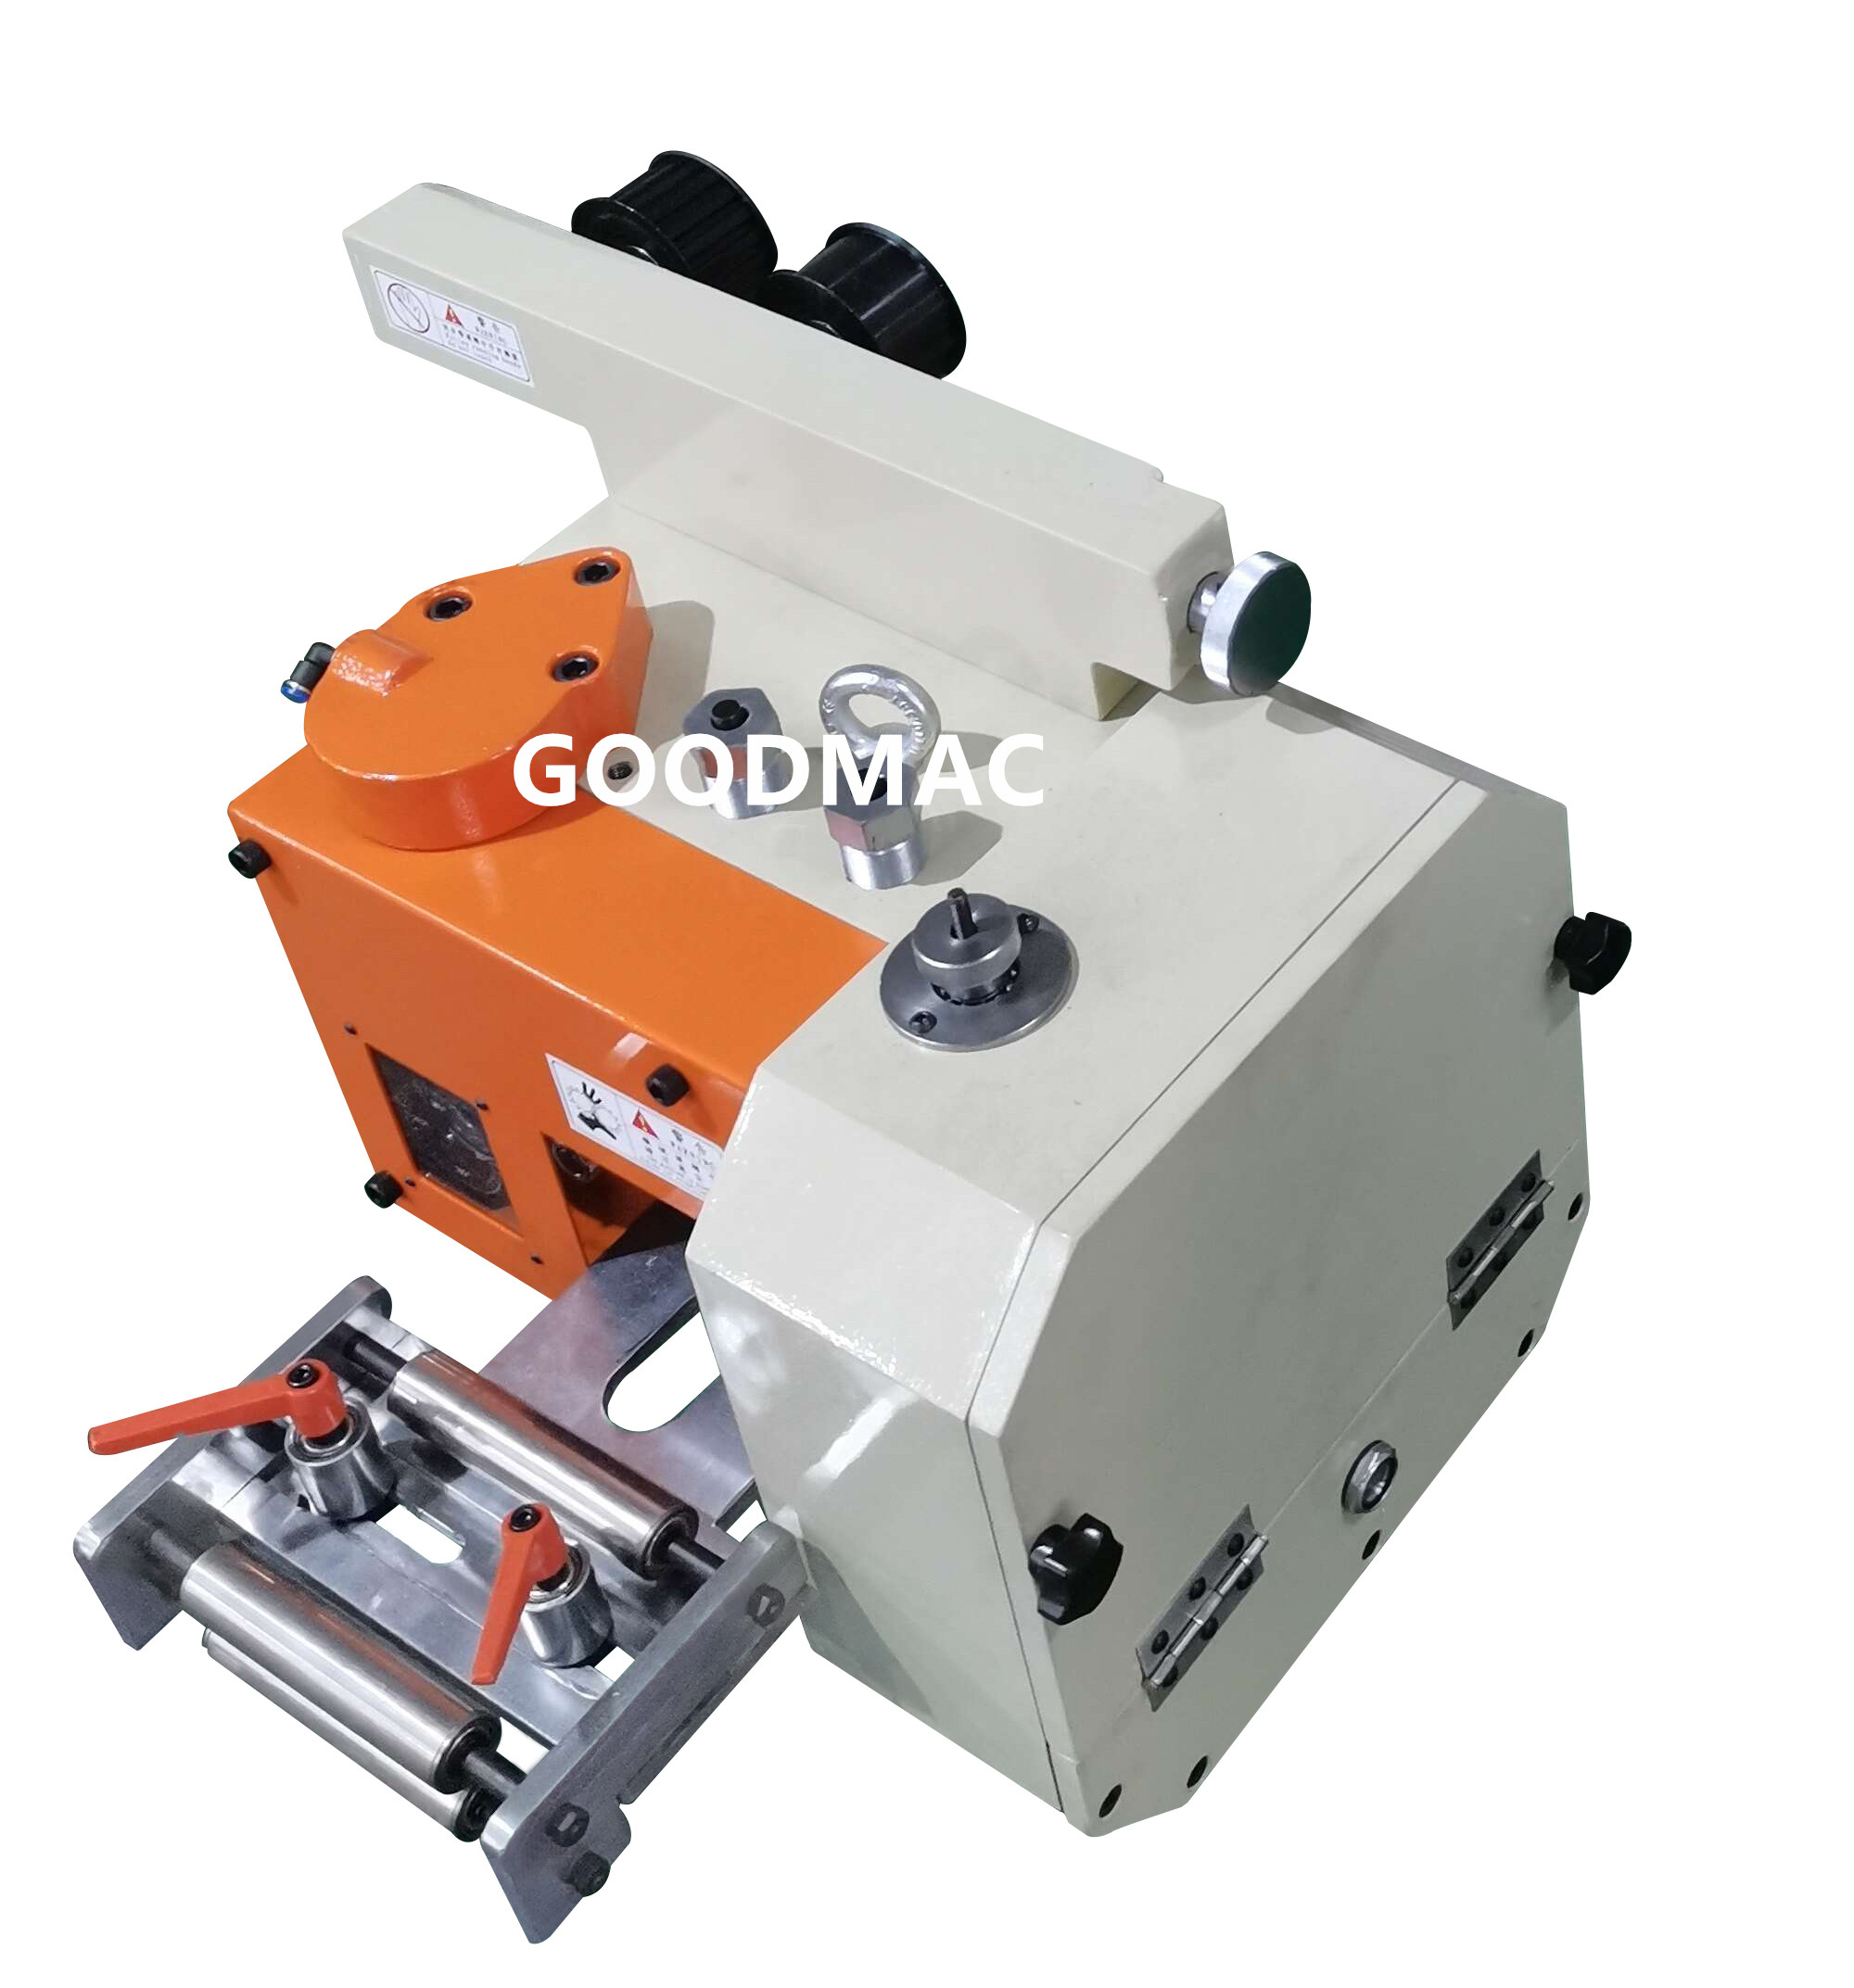 0.1-1.6mm high speed gear feeders, model GCF-150, GCF-200, GCF-250, GCF-300, GCF-400, GCF-500